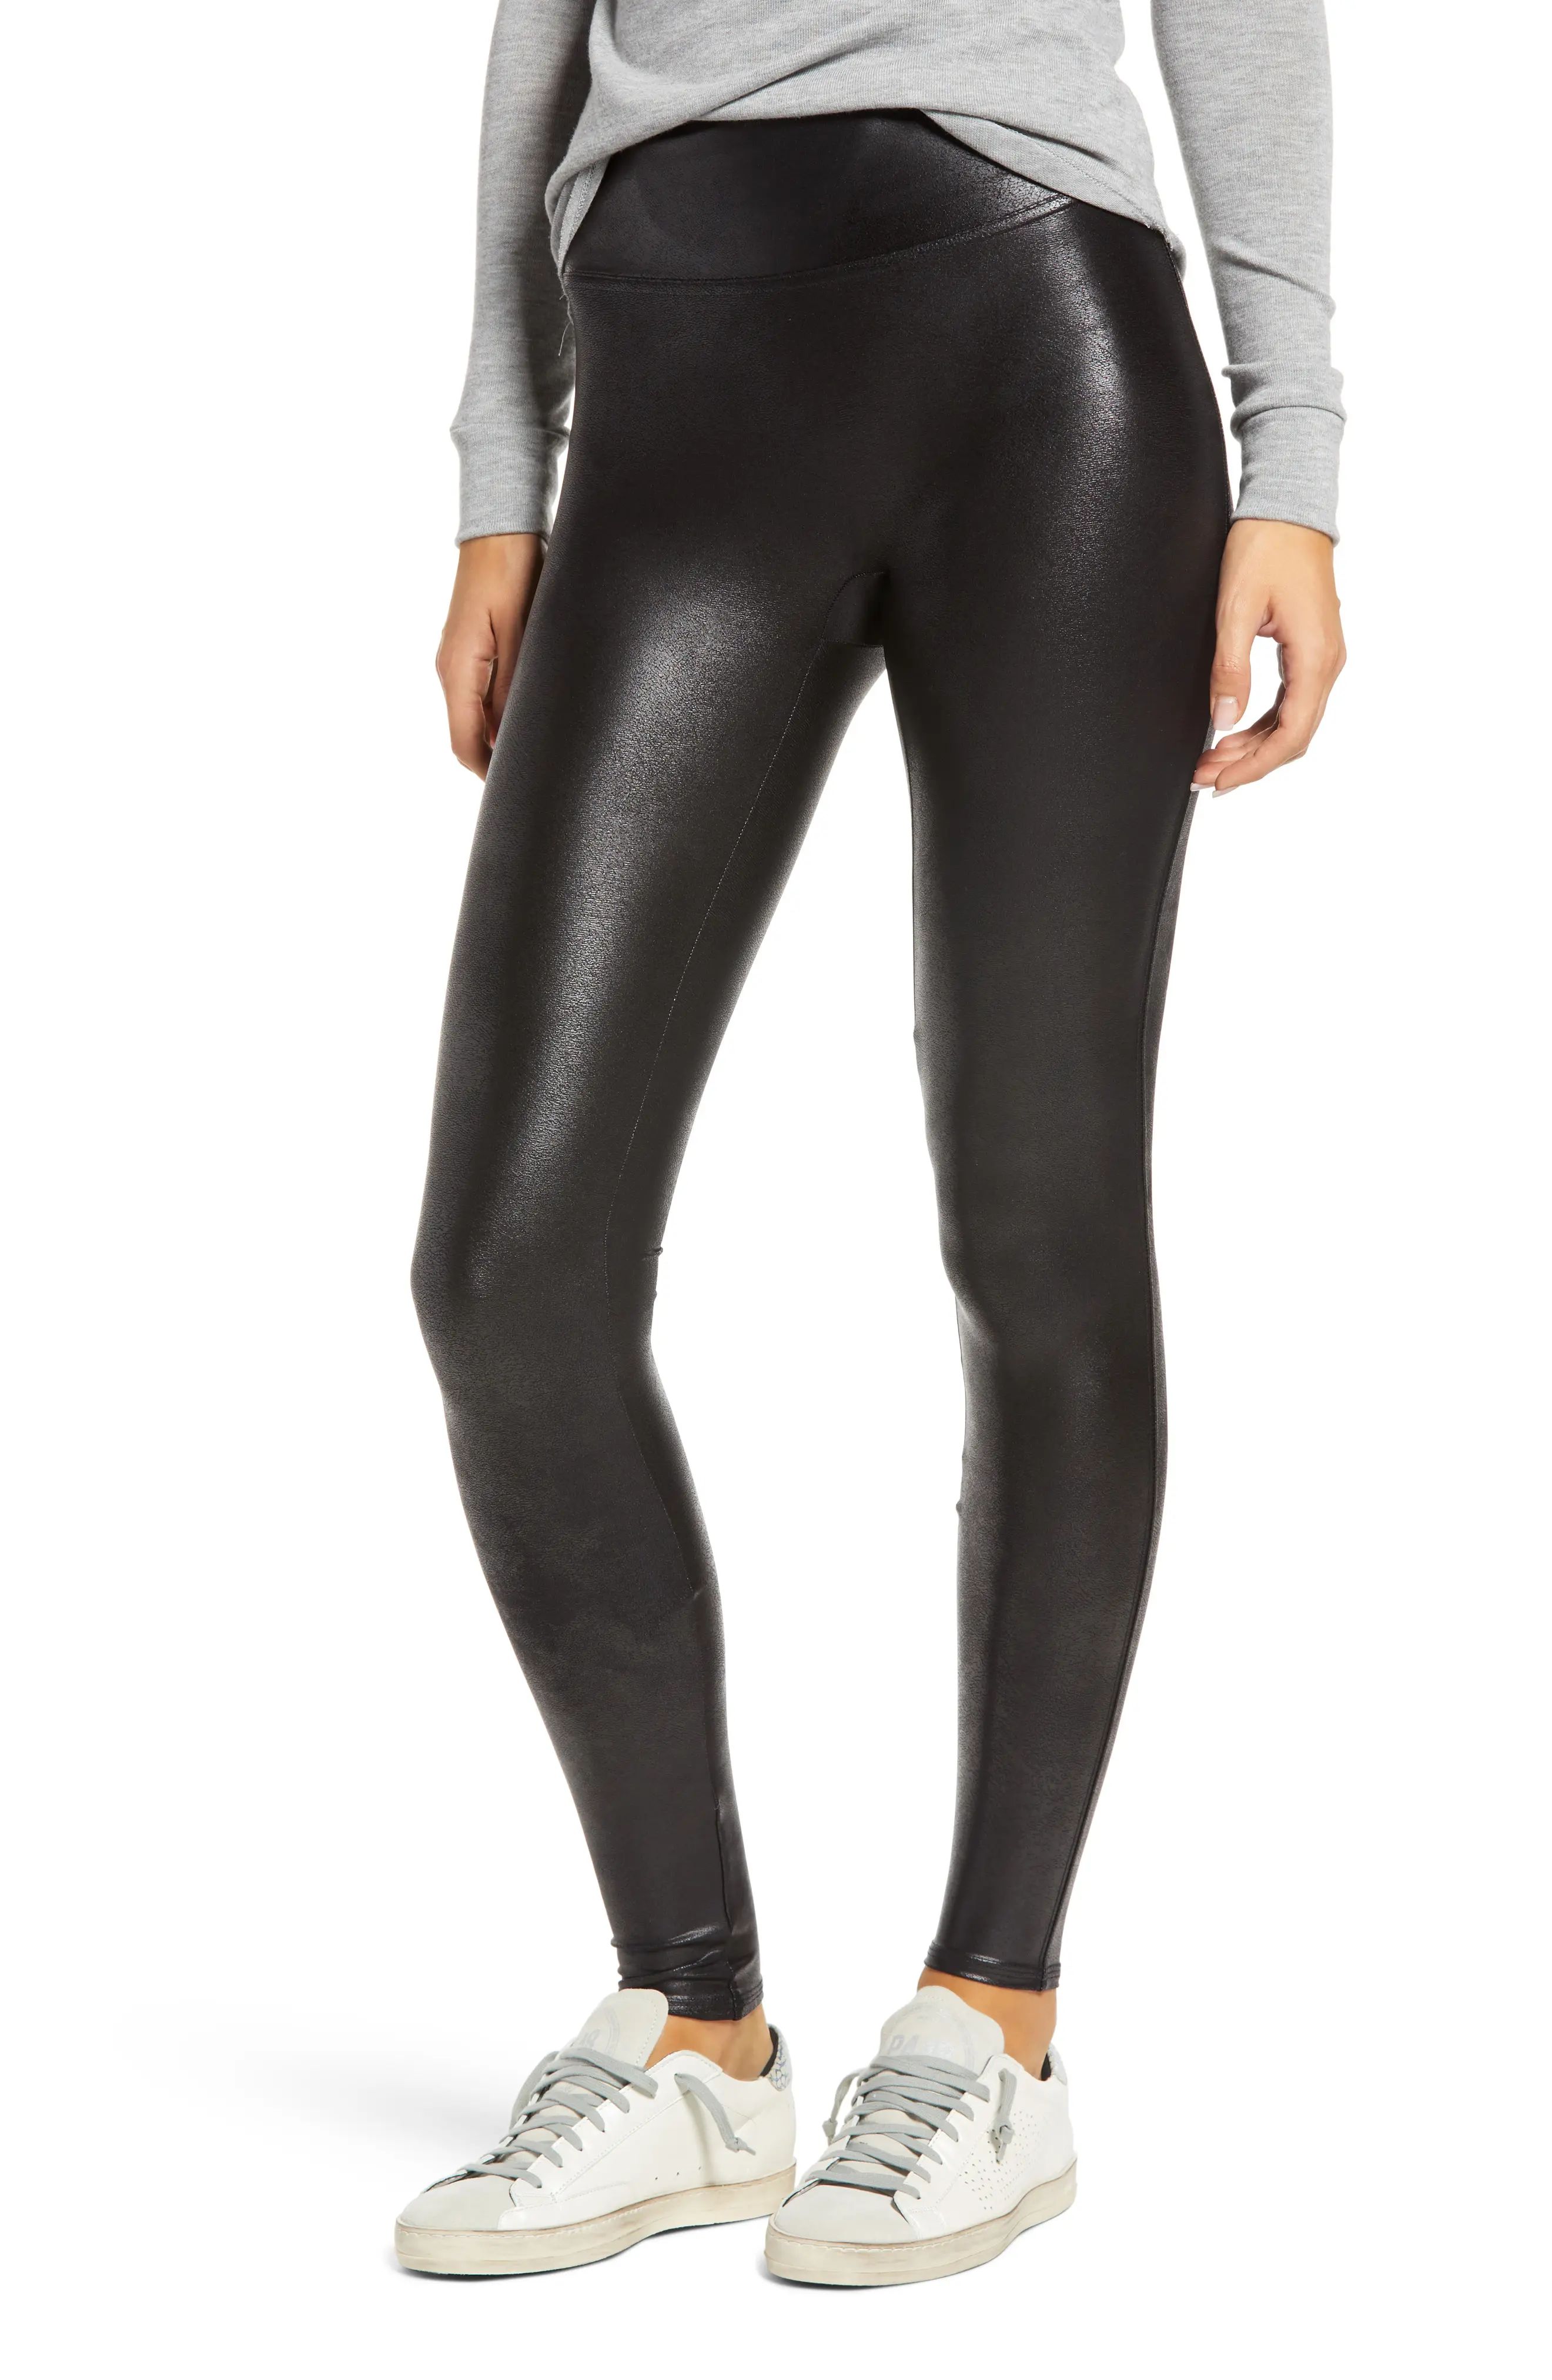 Women's Spanx Faux Leather Leggings (Regular, Petite & Plus Size) | Nordstrom